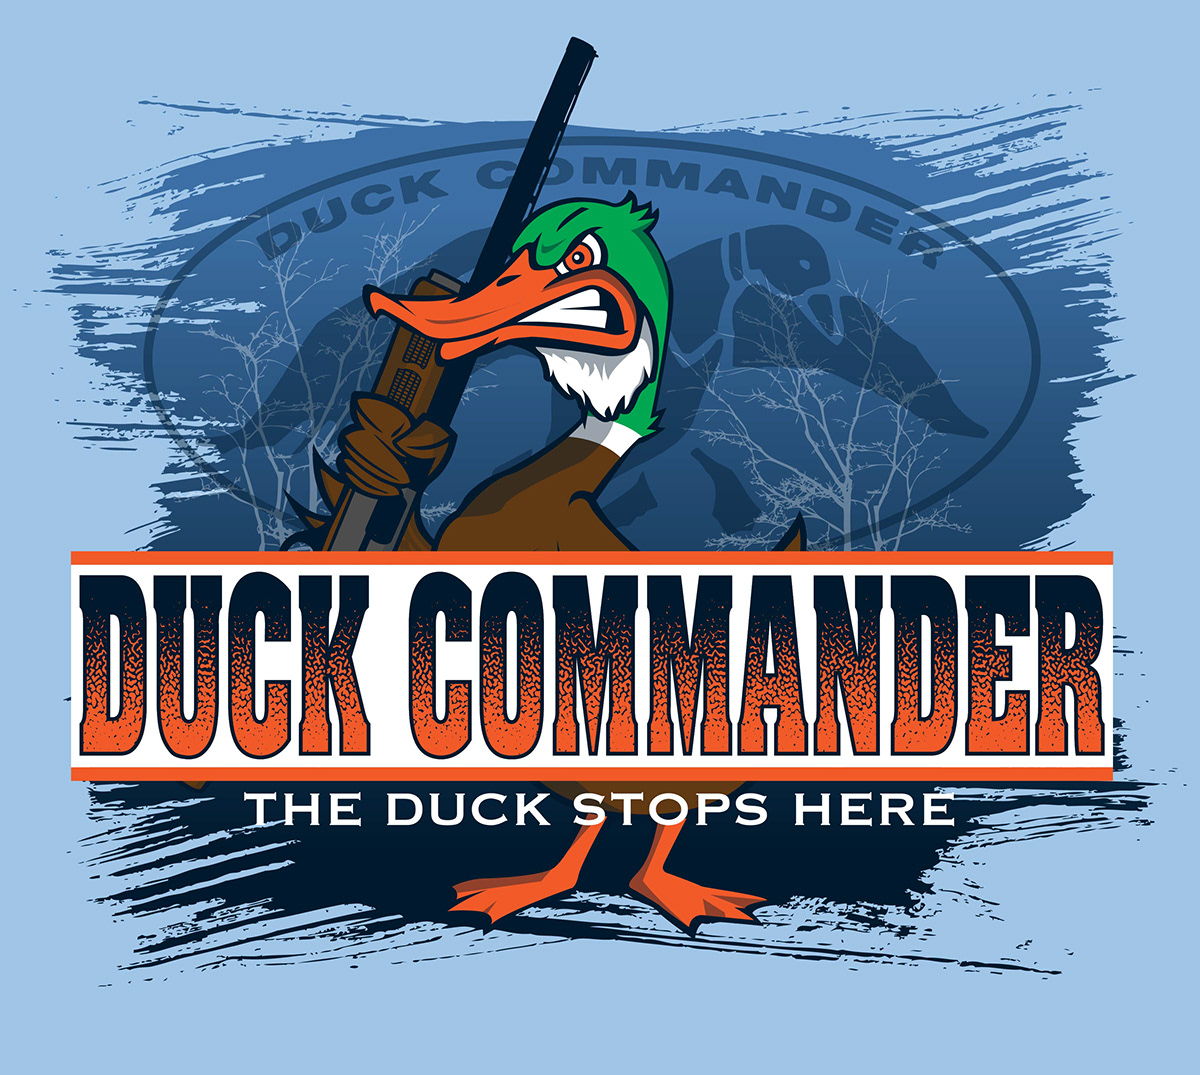 print ducks wildlife  hunting Gun guns brand